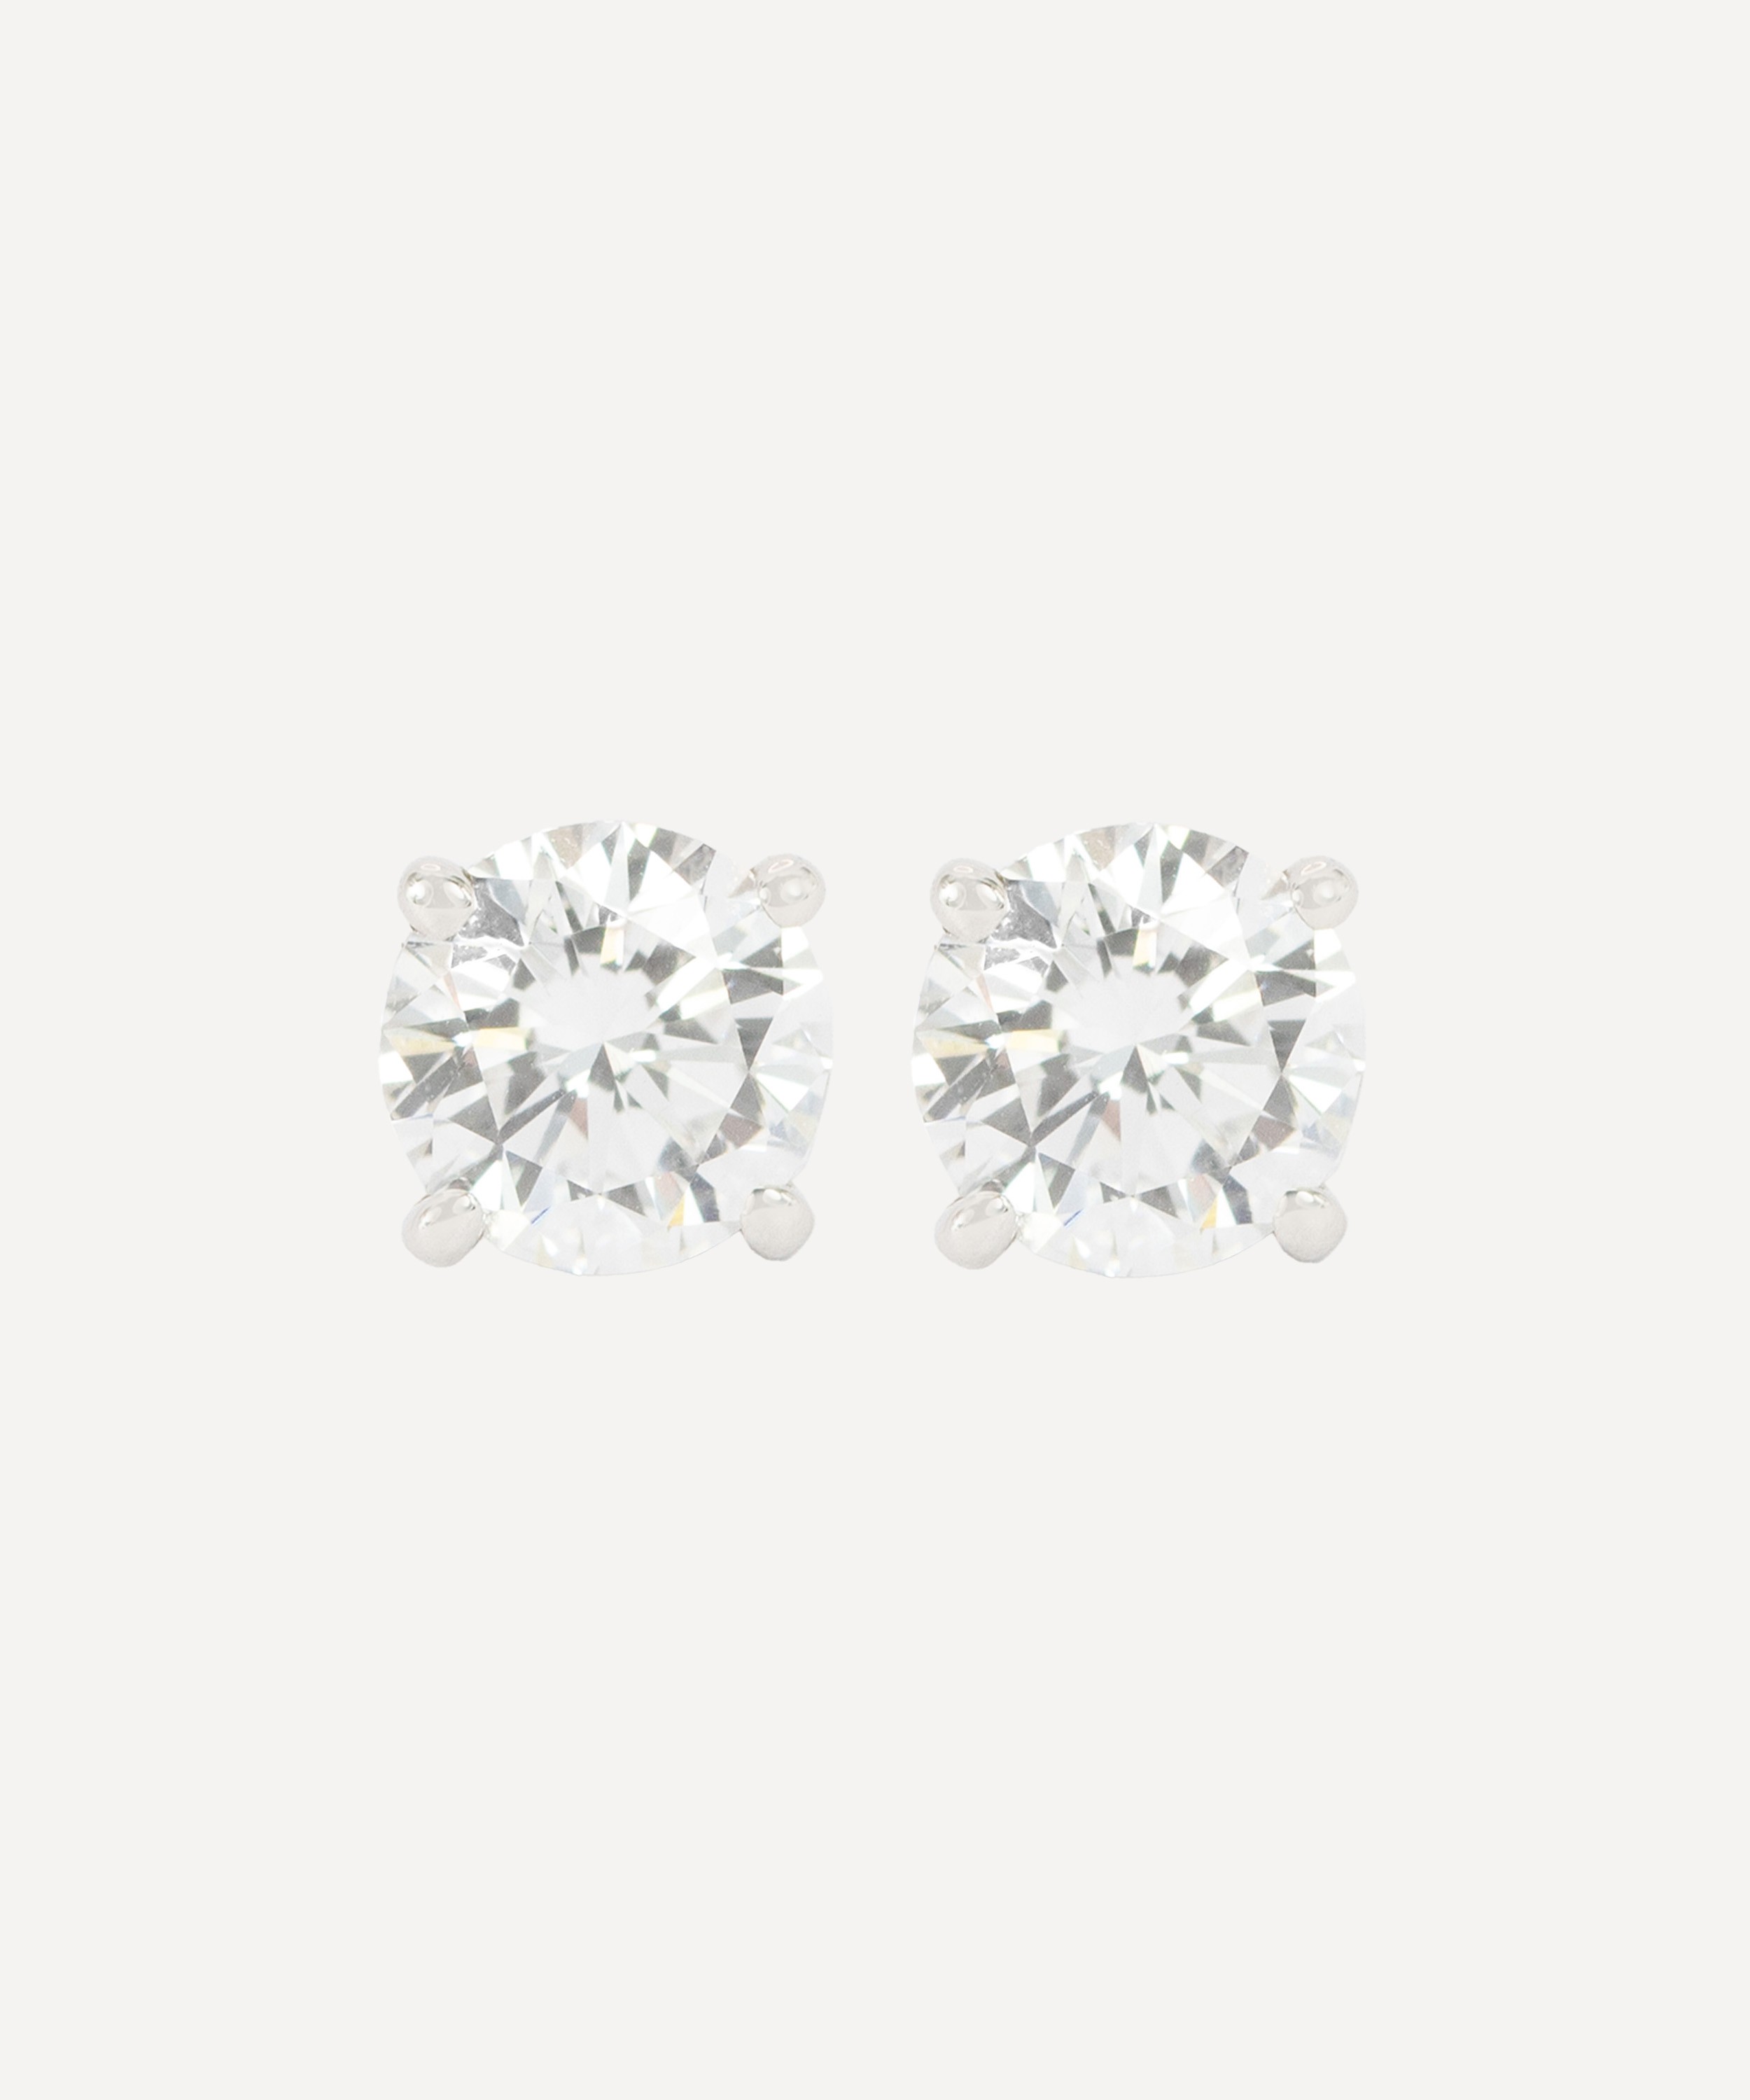 Kojis - 18ct White Gold Classic Diamond Stud Earrings